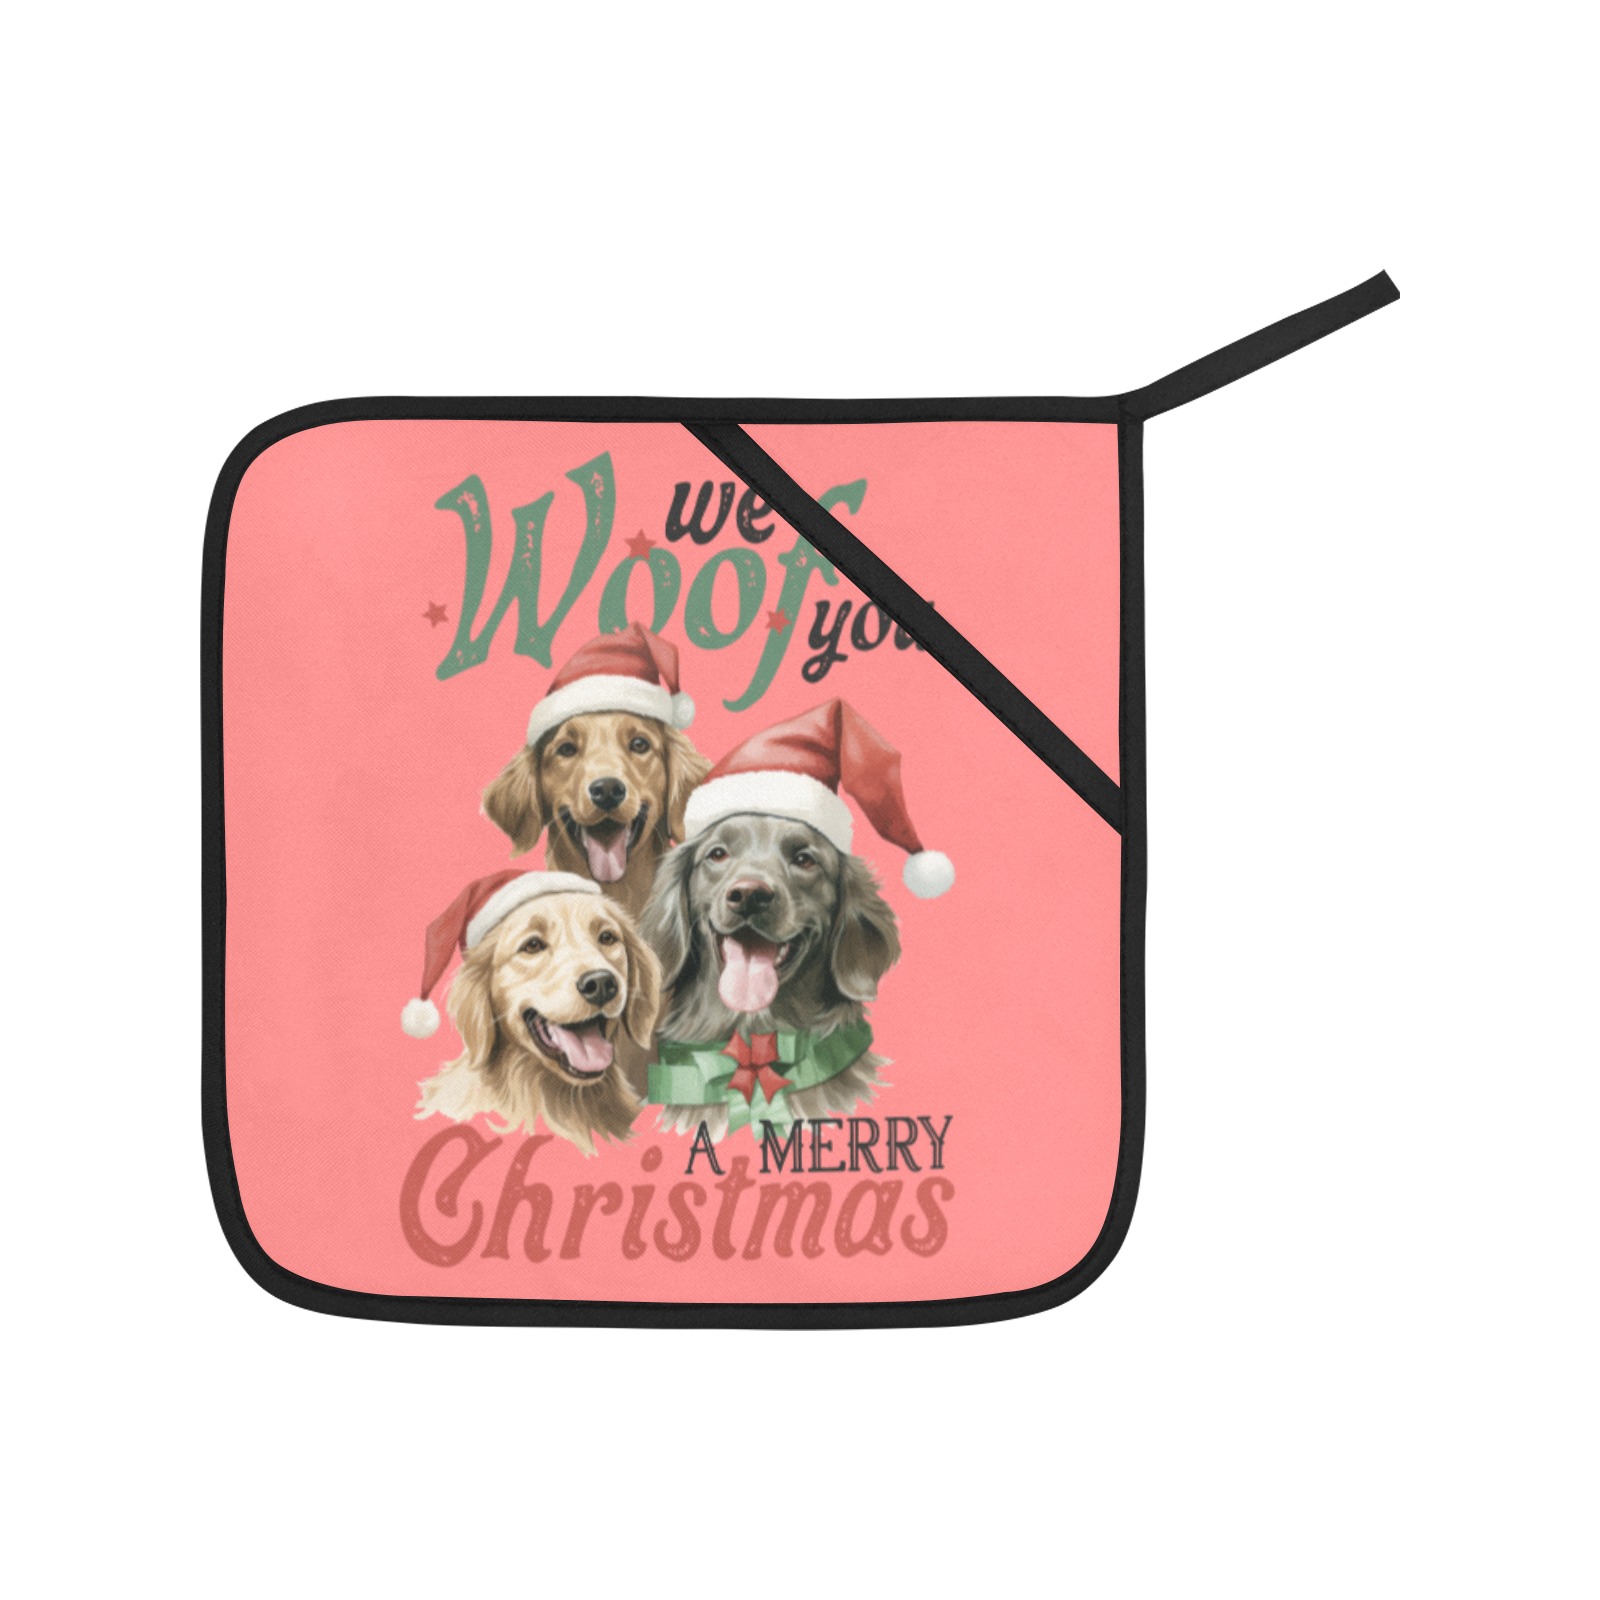 We Woof You A Merry Christmas (R) Oven Mitt & Pot Holder